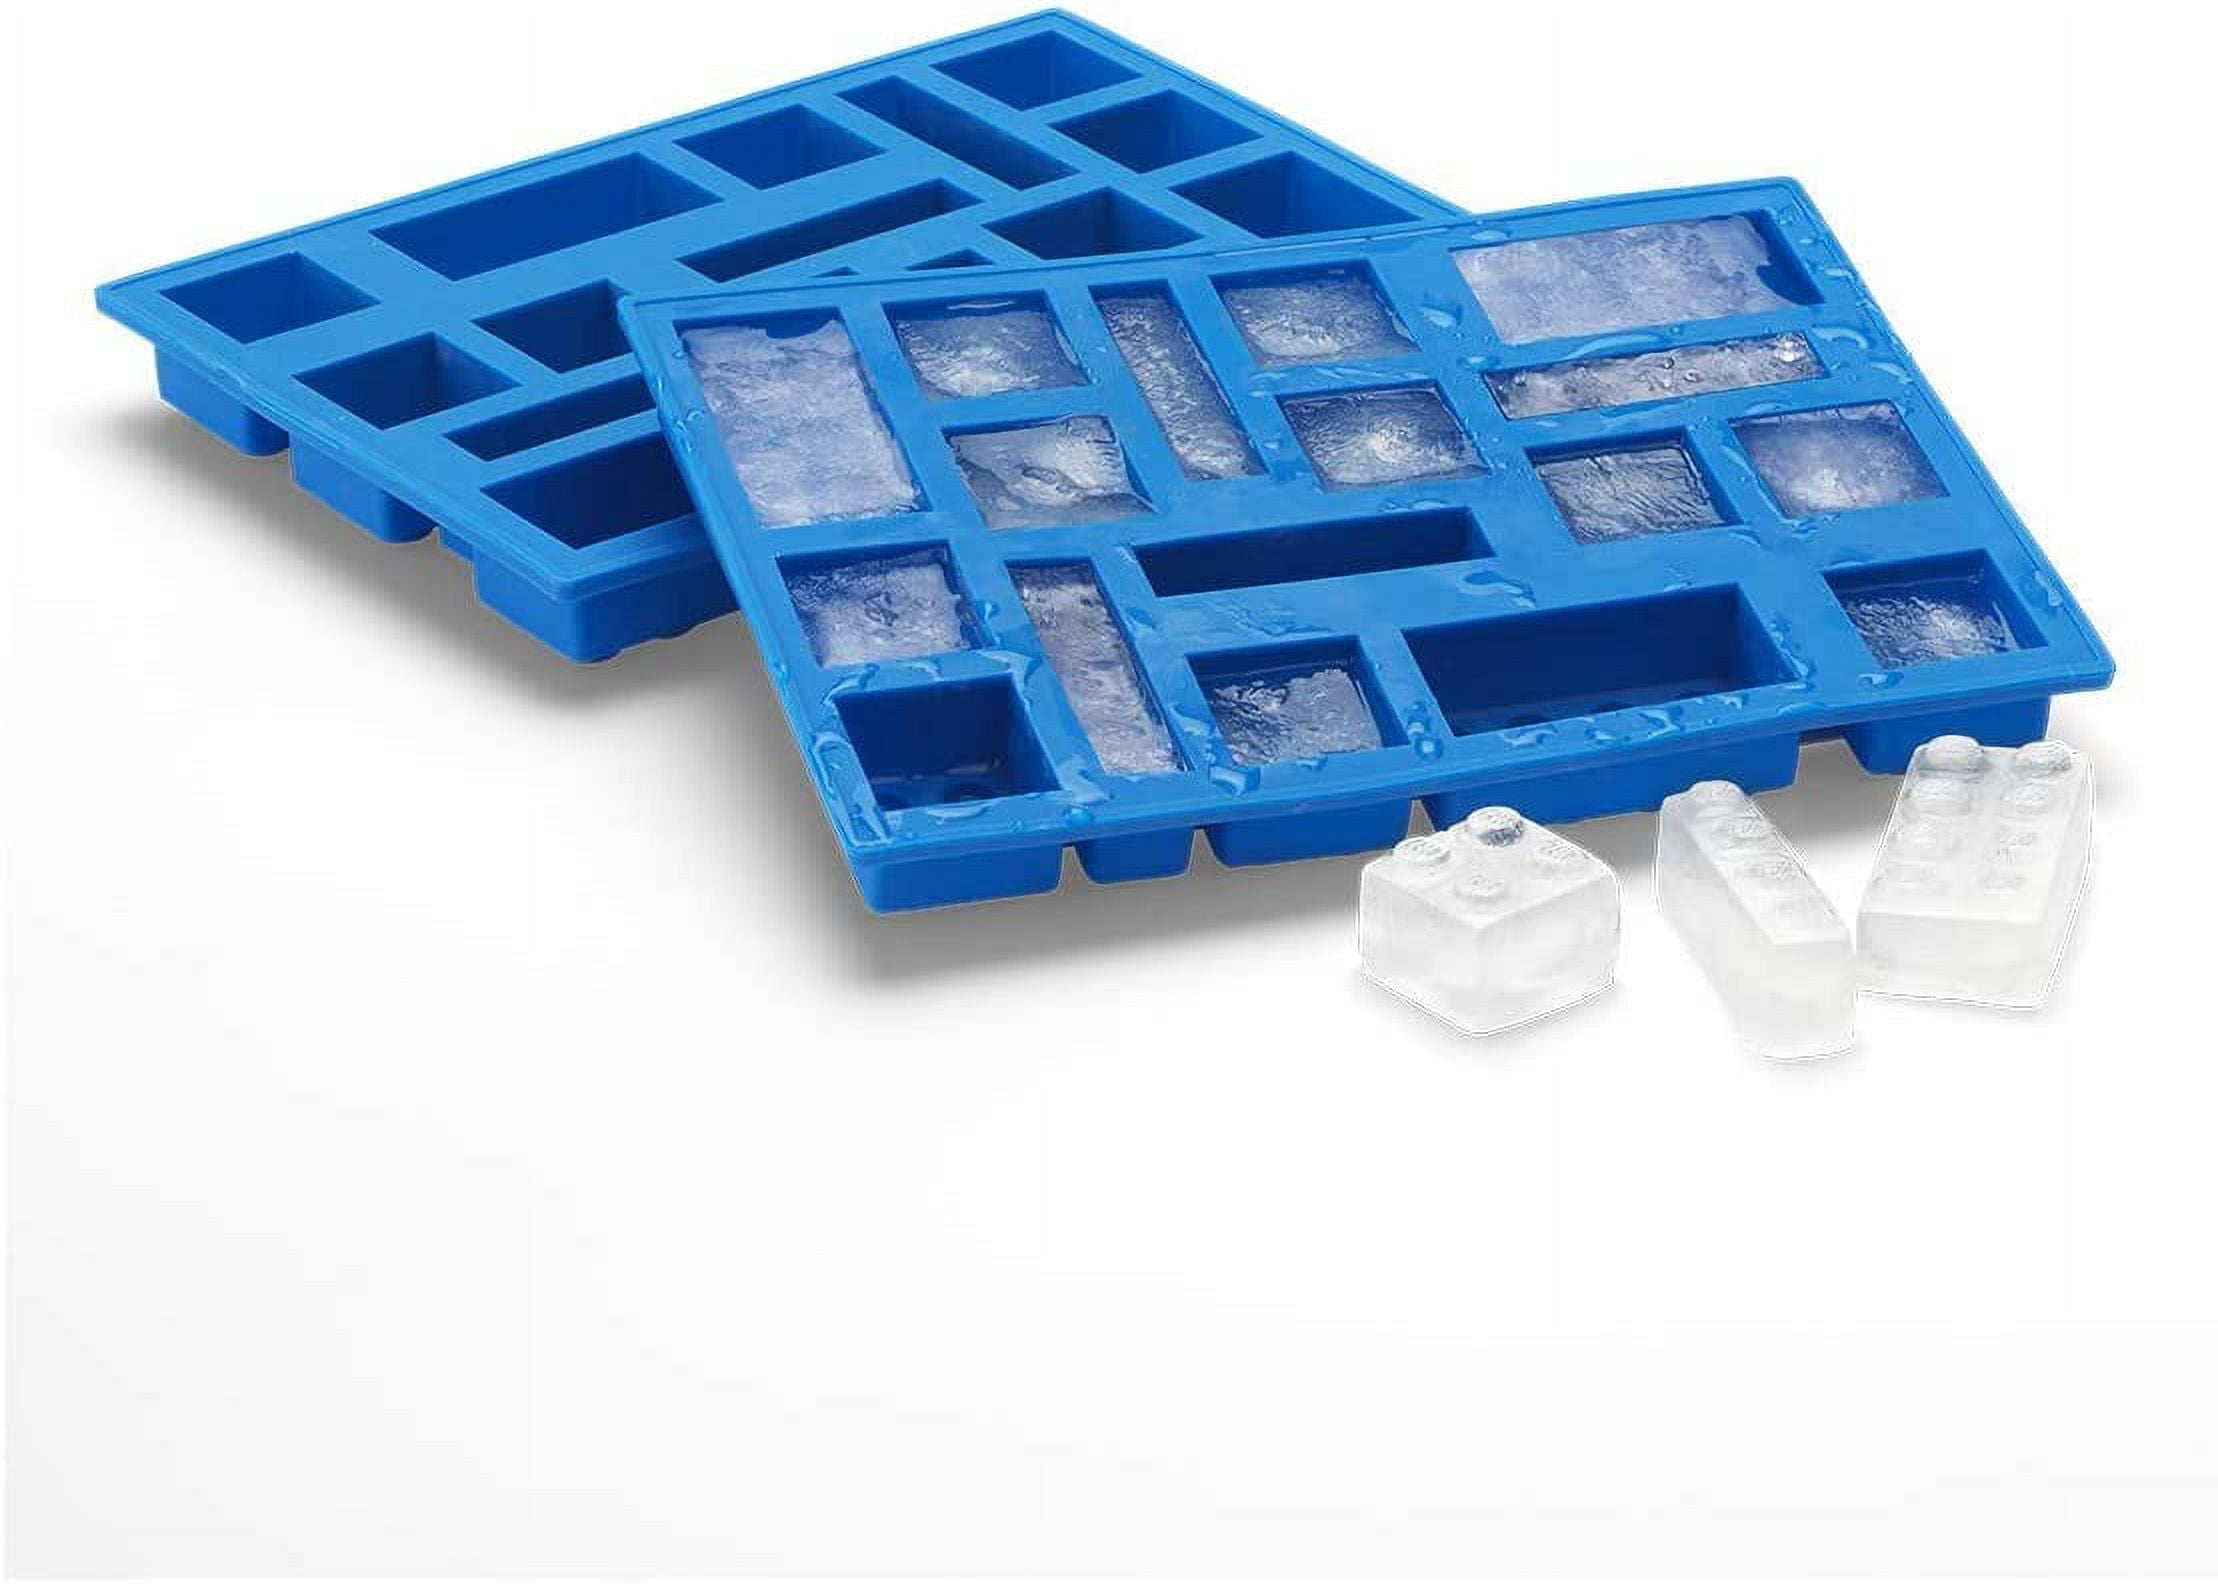 Building Blocks Novelty Ice Cube Trays - Set of 5